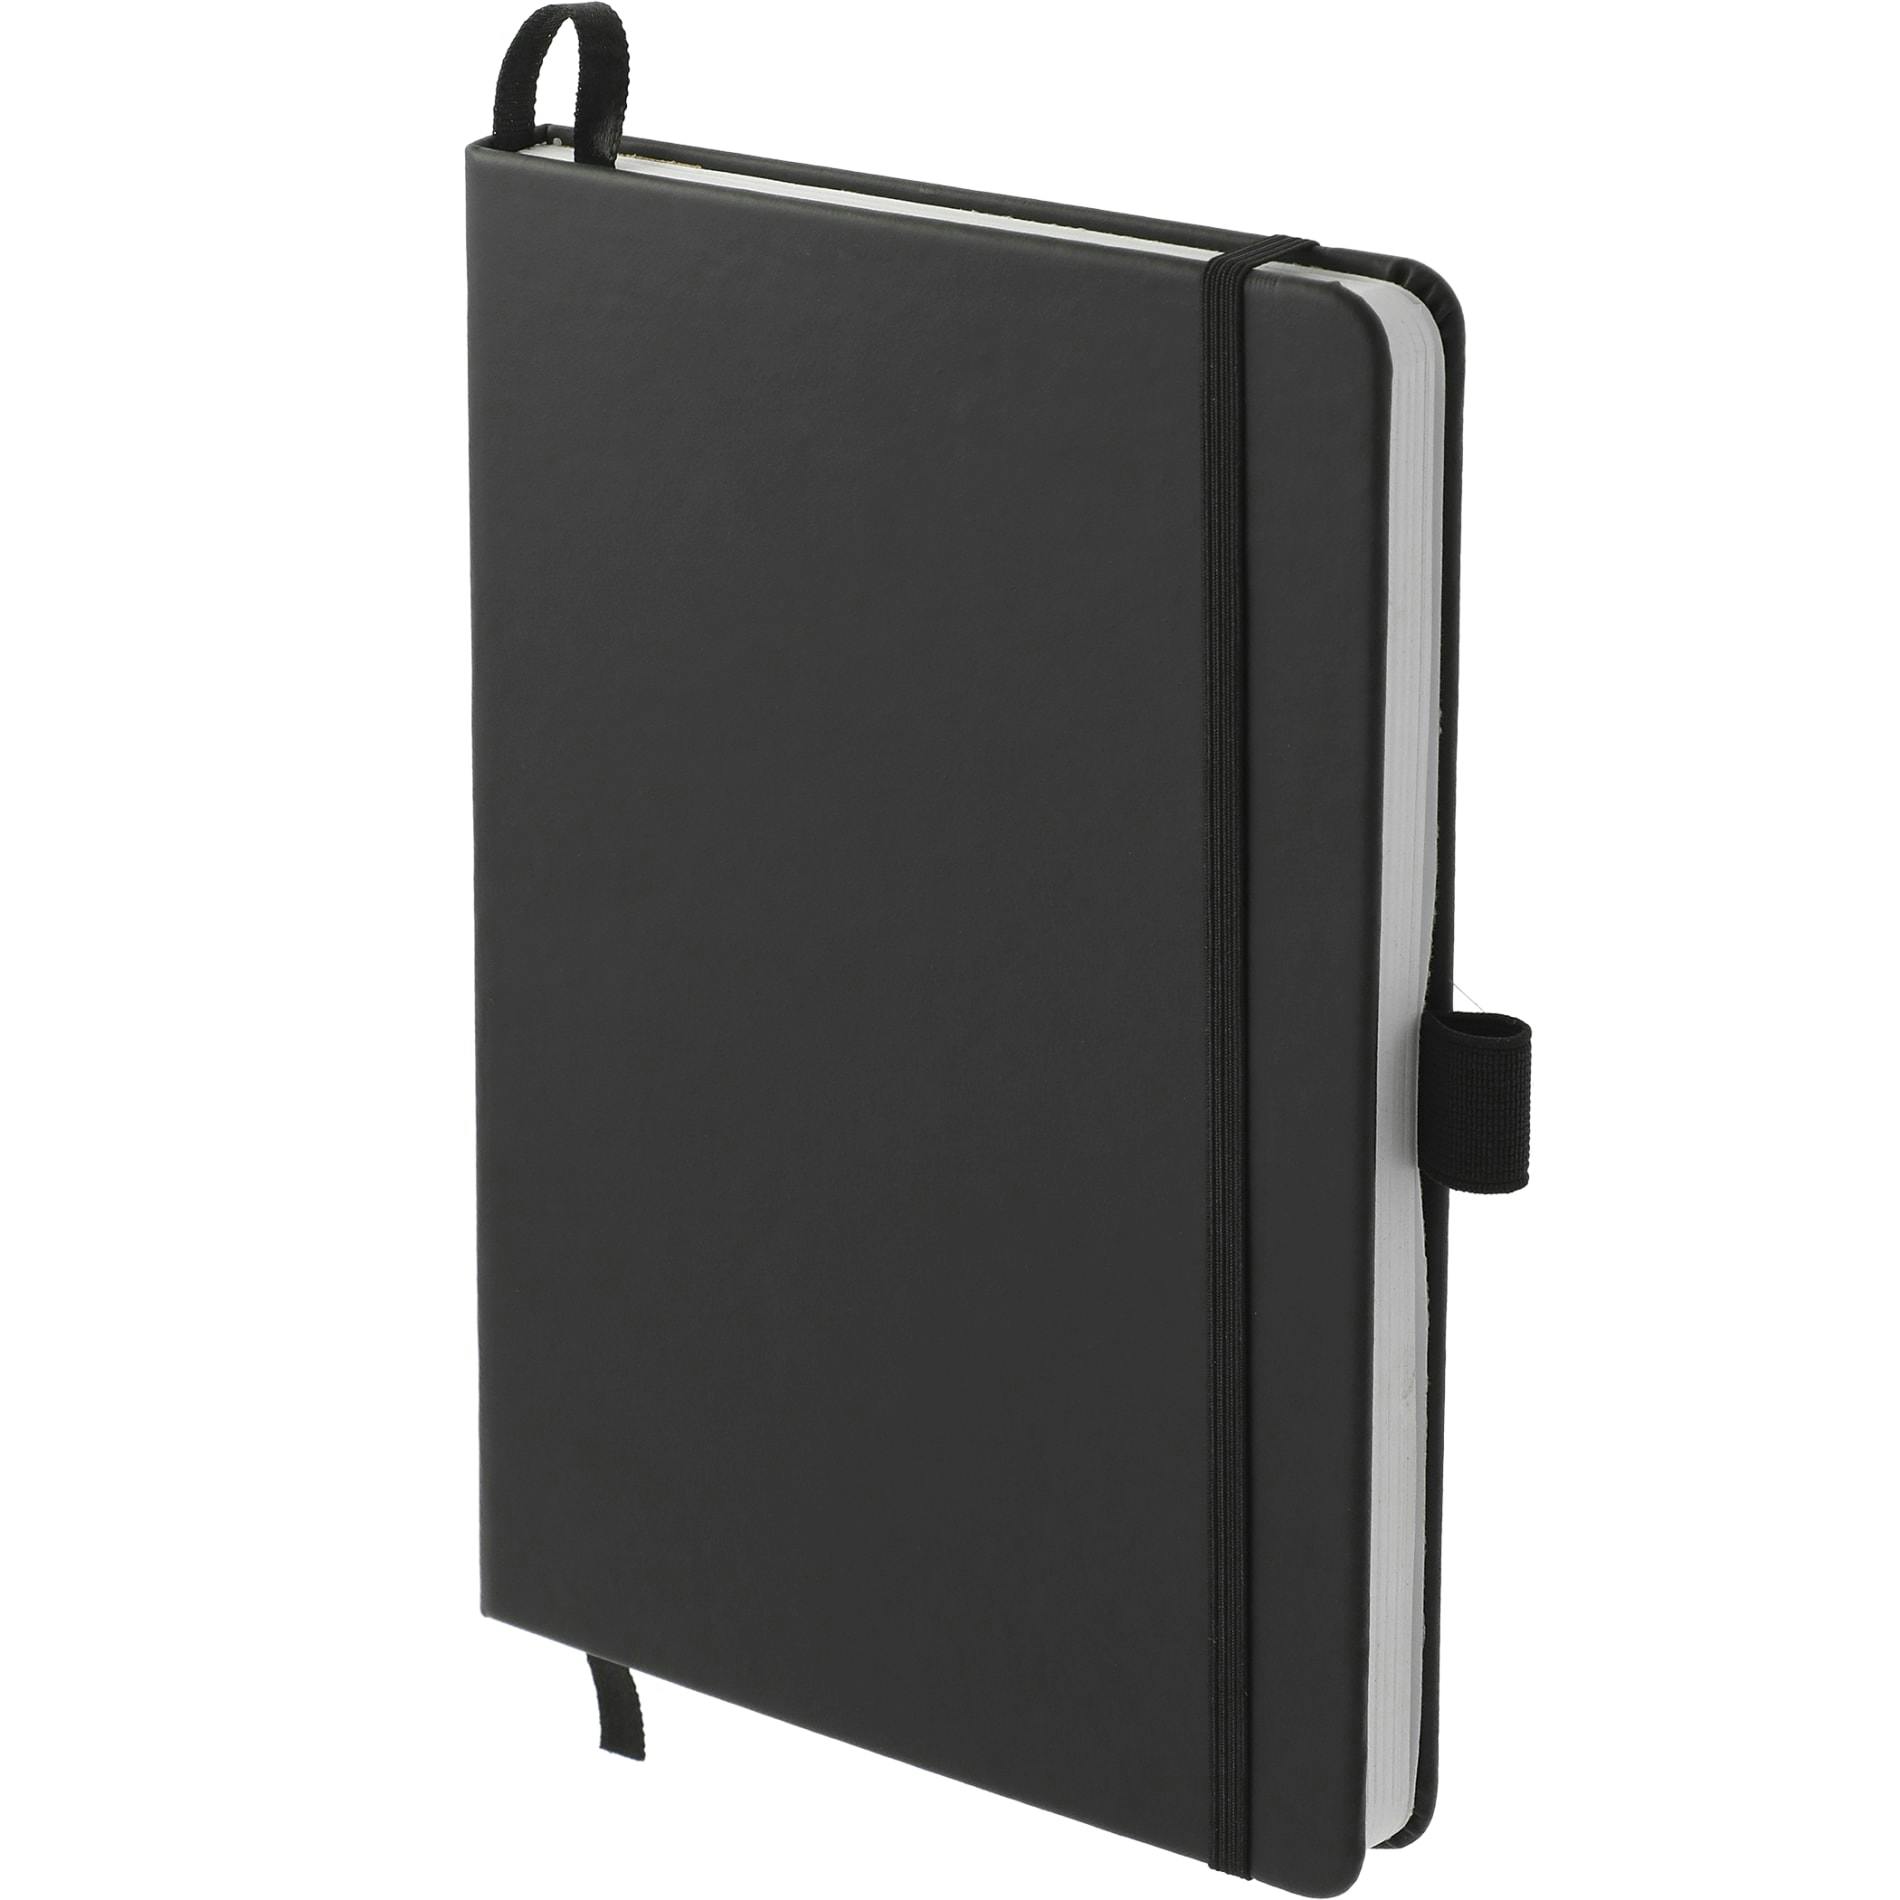 5.5” x 8.5” Mela Bound JournalBook ® - additional Image 4